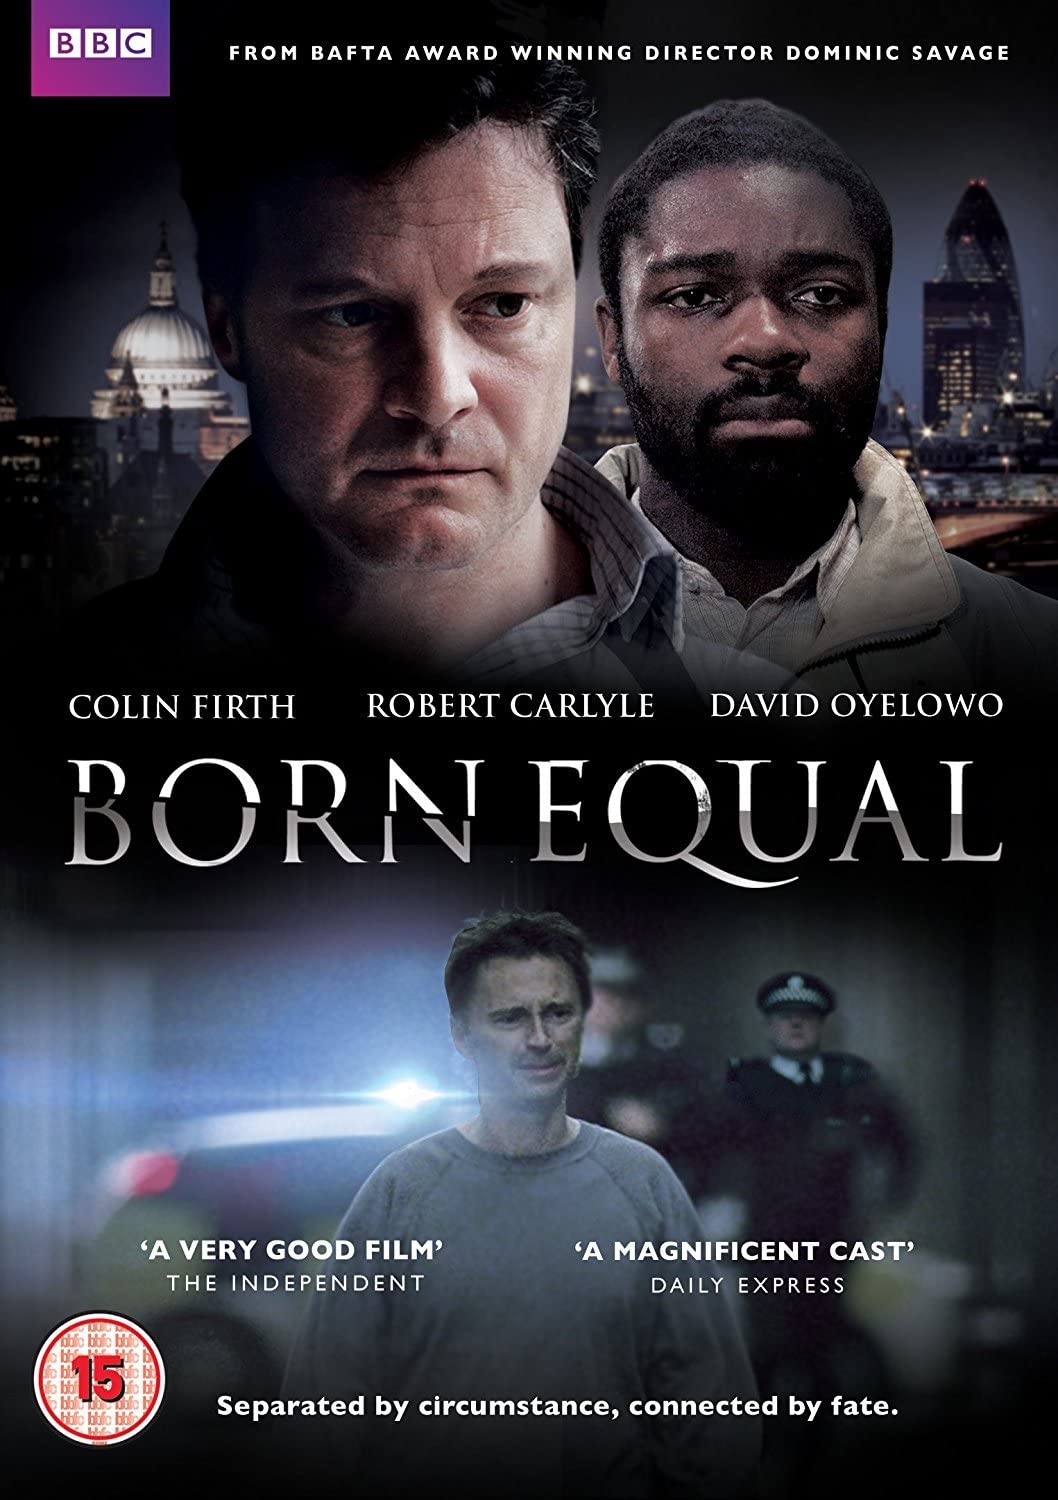 Born Equal ( BBC film from Bafta award winning director Dominic Savage ) - Drama/Social [DVD]